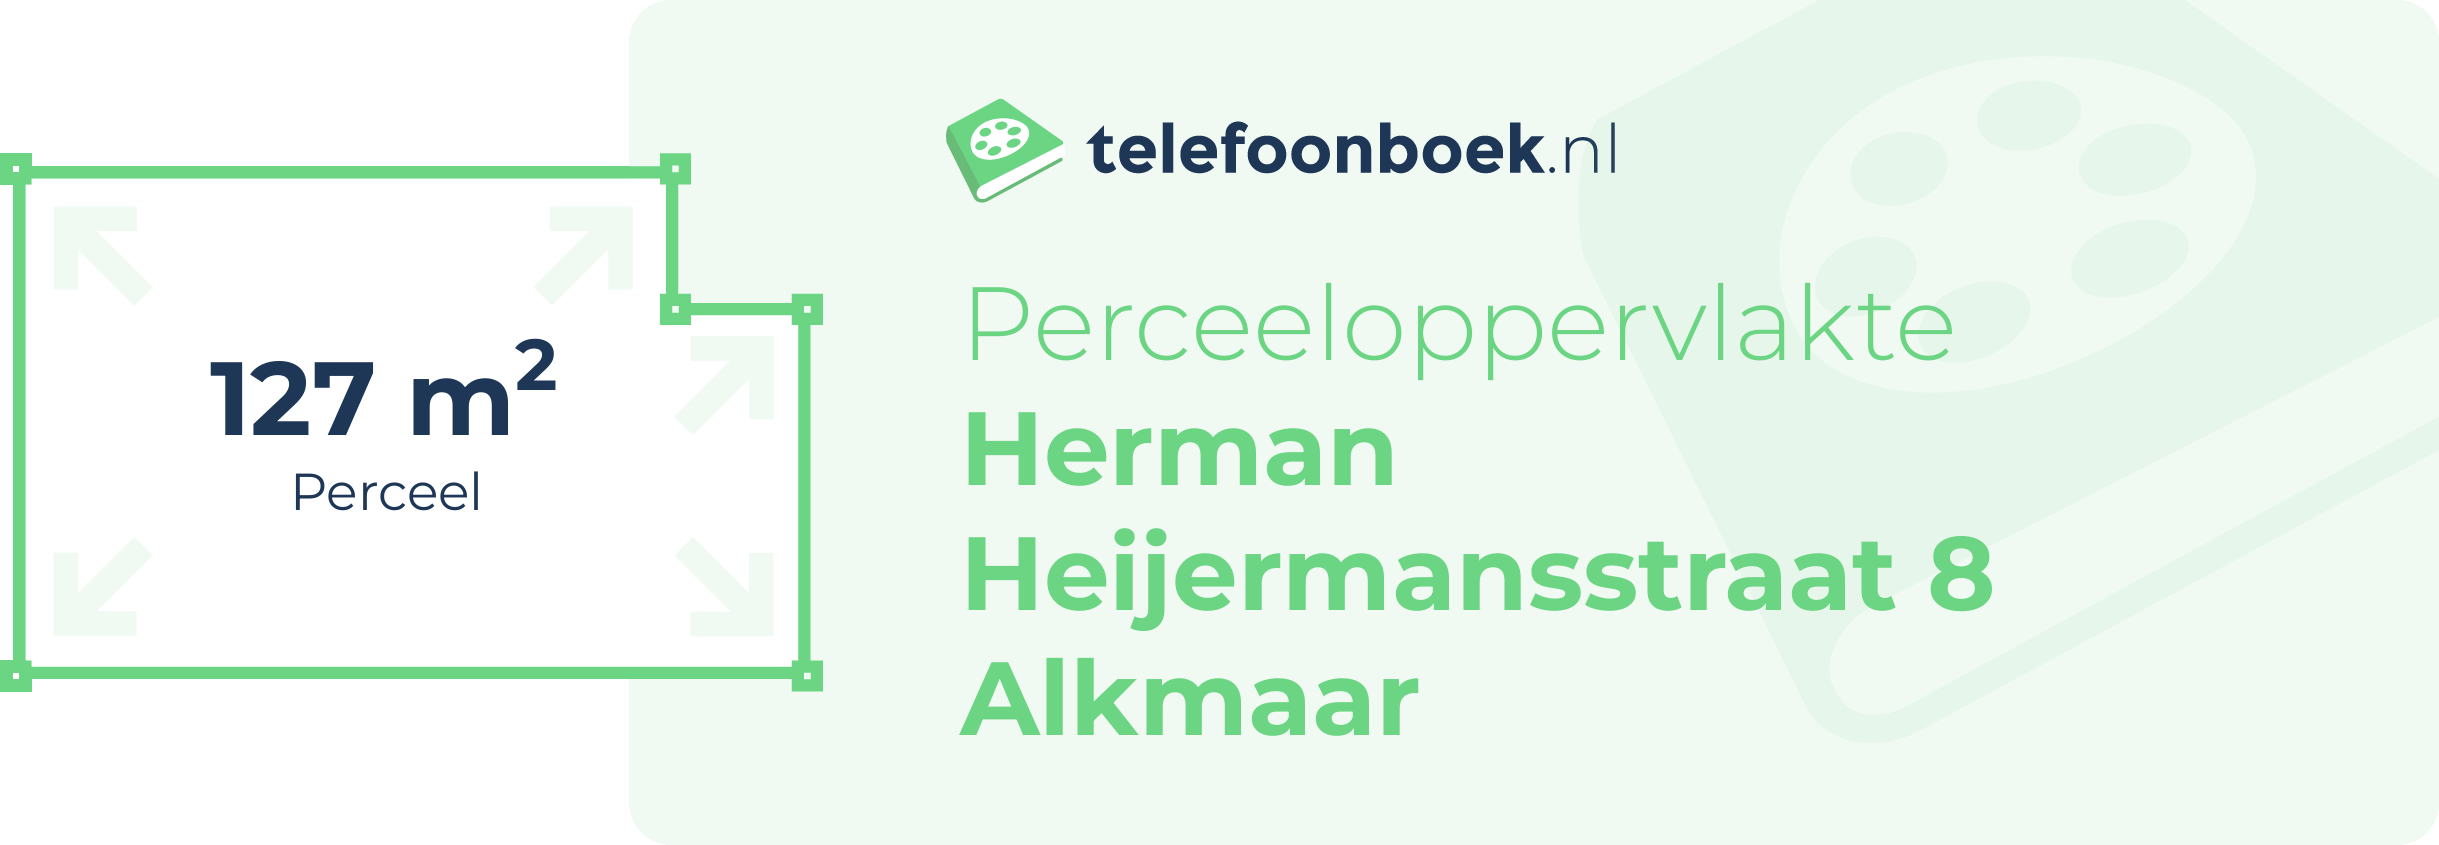 Perceeloppervlakte Herman Heijermansstraat 8 Alkmaar